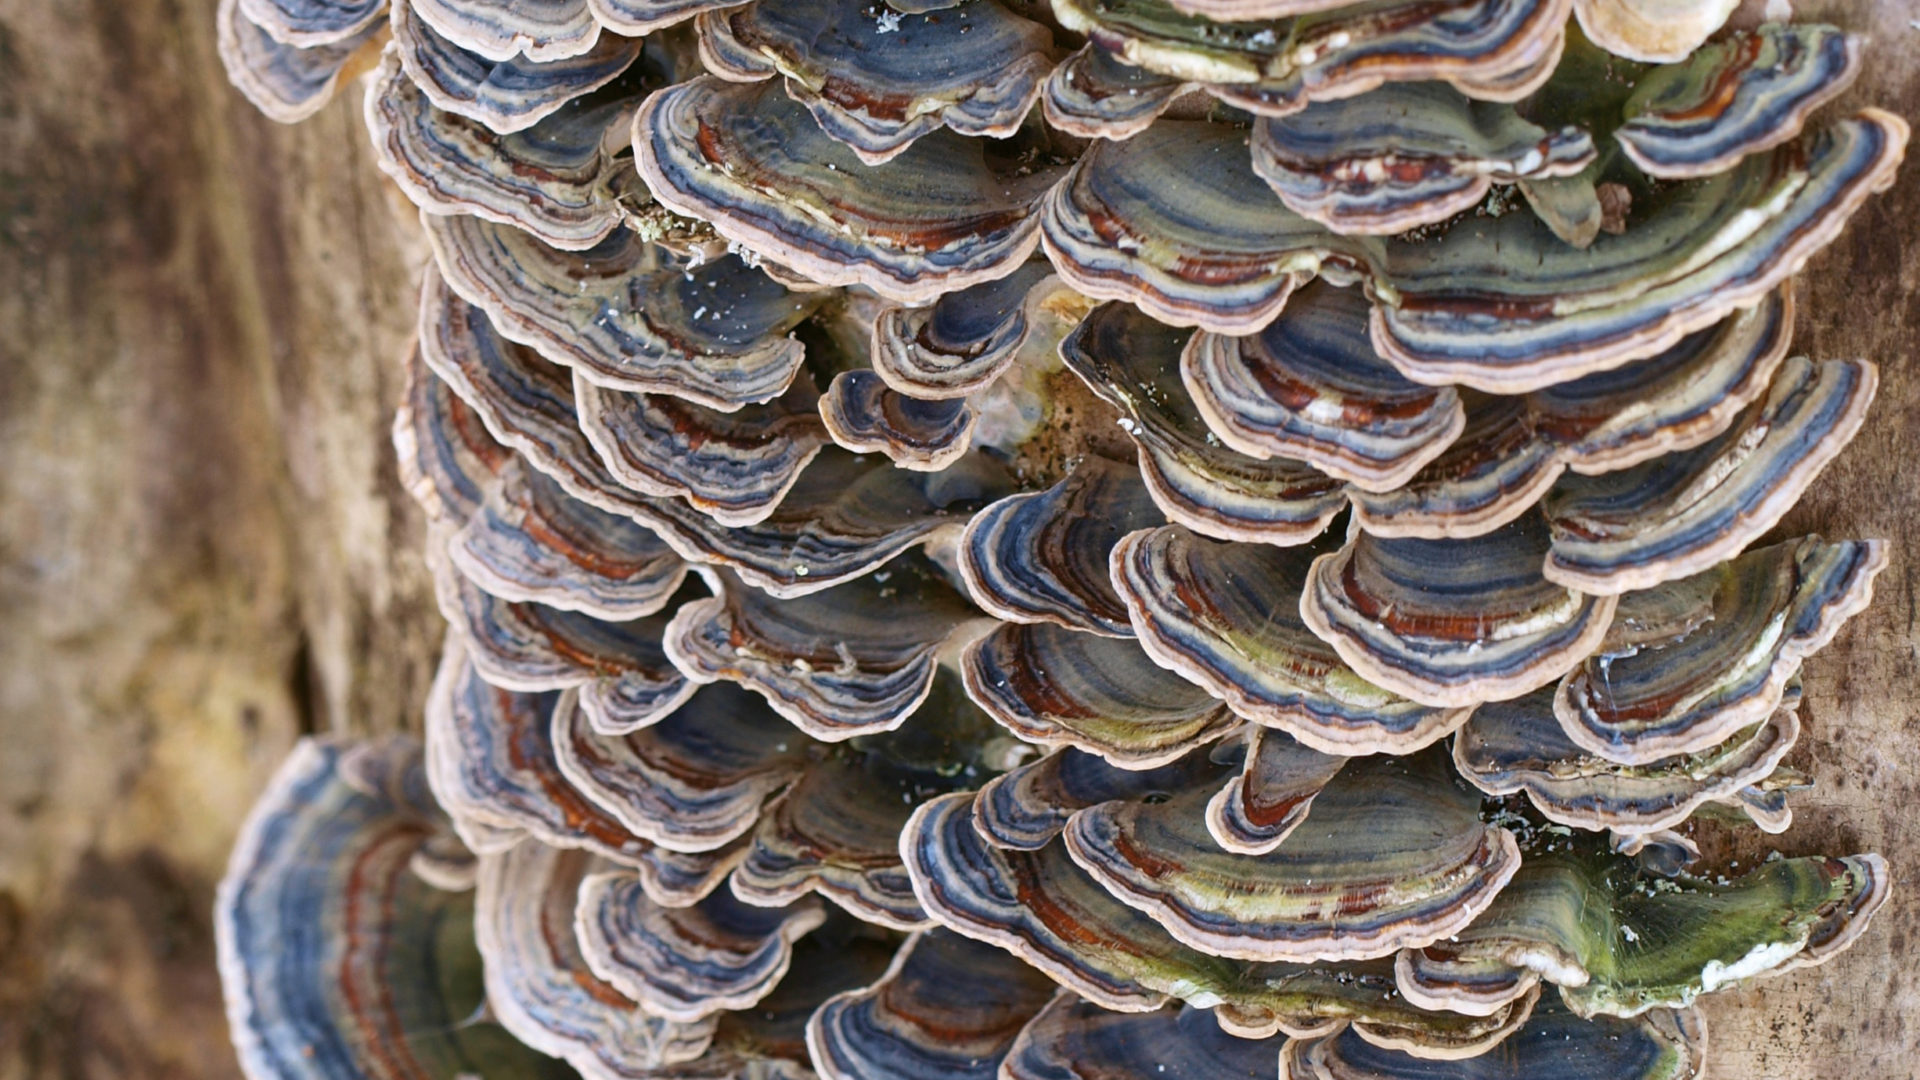 Wood and tree fungi